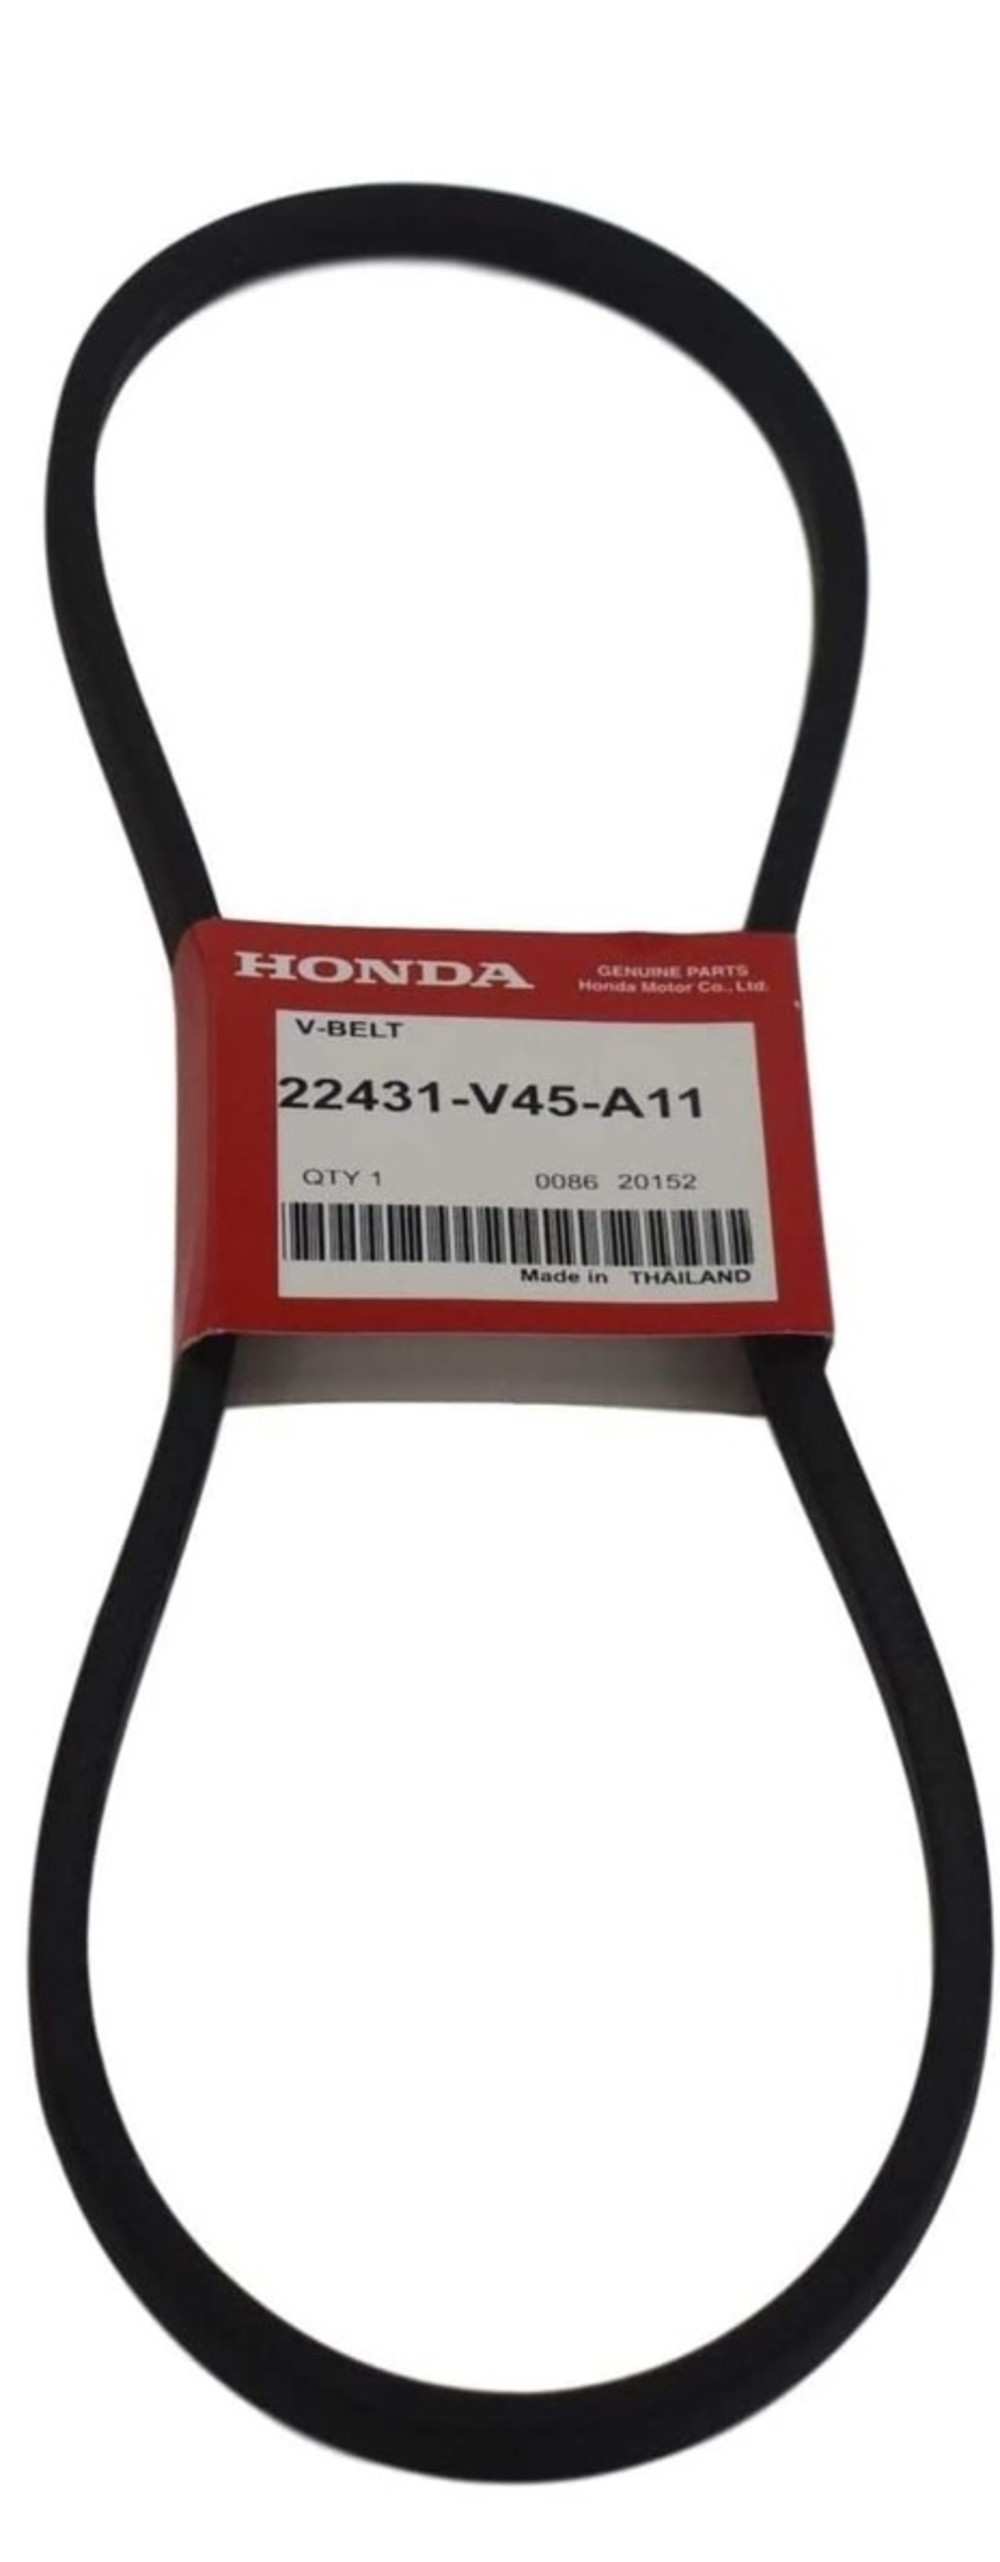 Honda Genuine OEM V-Belt SA-37 Fits HSS724A HSS928A HSS1332A Snow Blowers 22431-V45-A11 from Honda